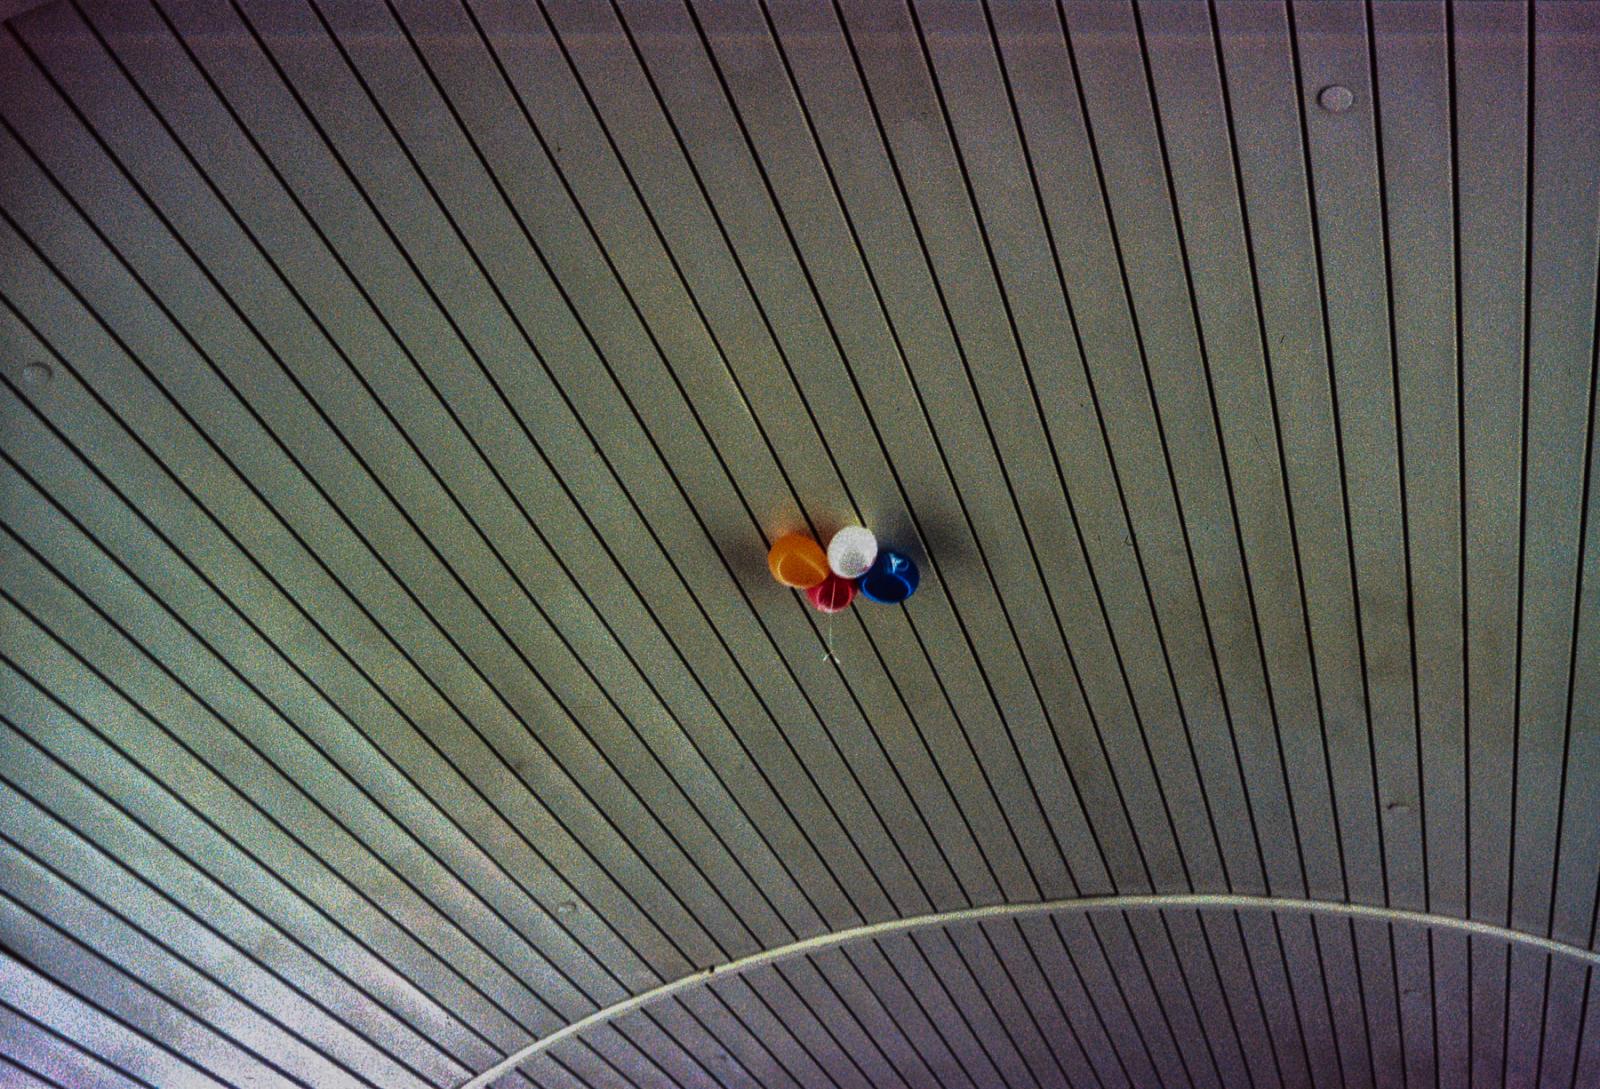 What I See - Penn Station, New York.